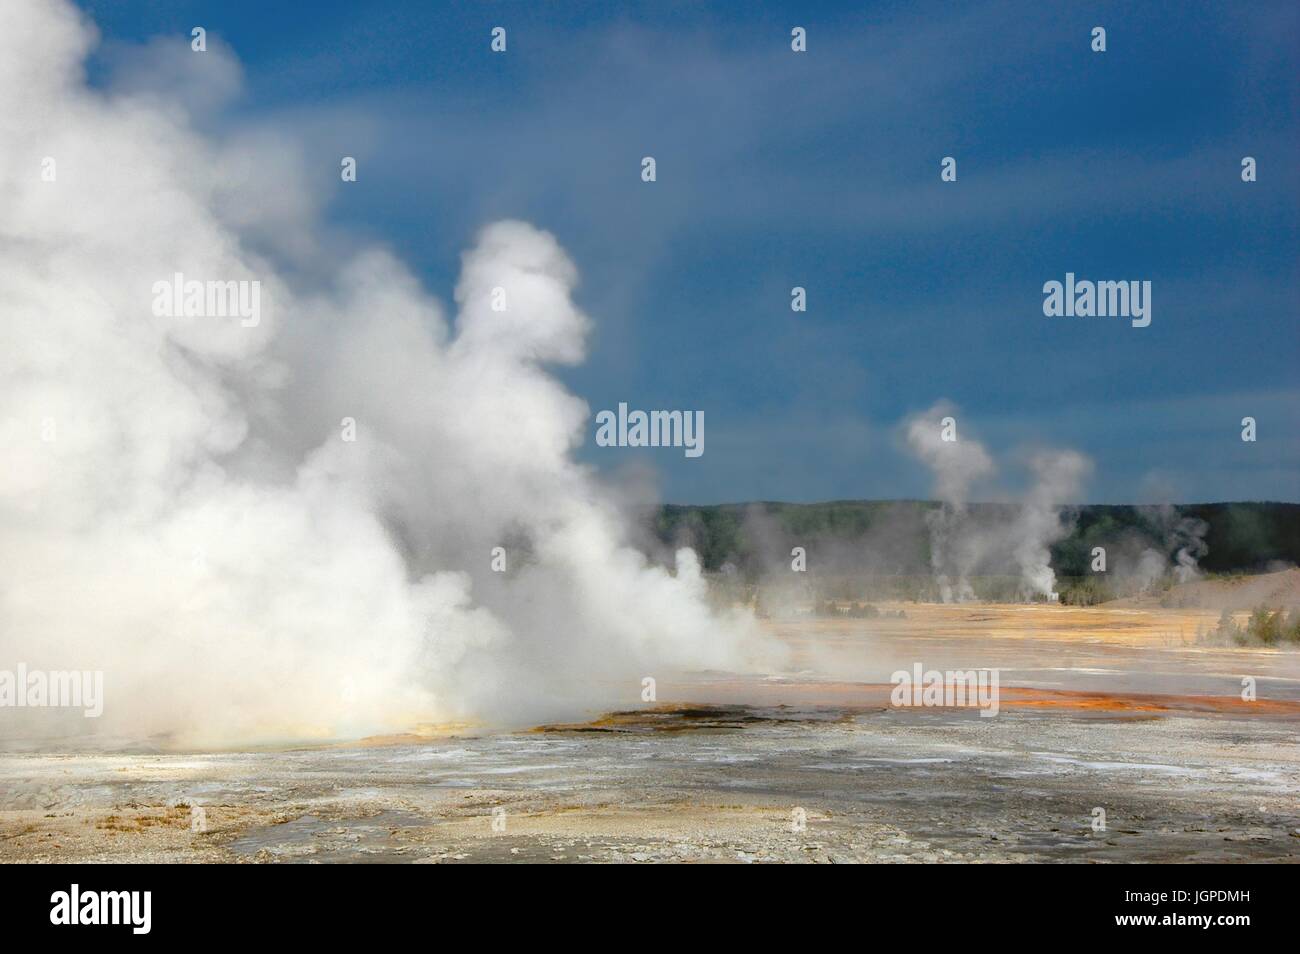 Field of steaming hot springs, dangerous terrain Stock Photo